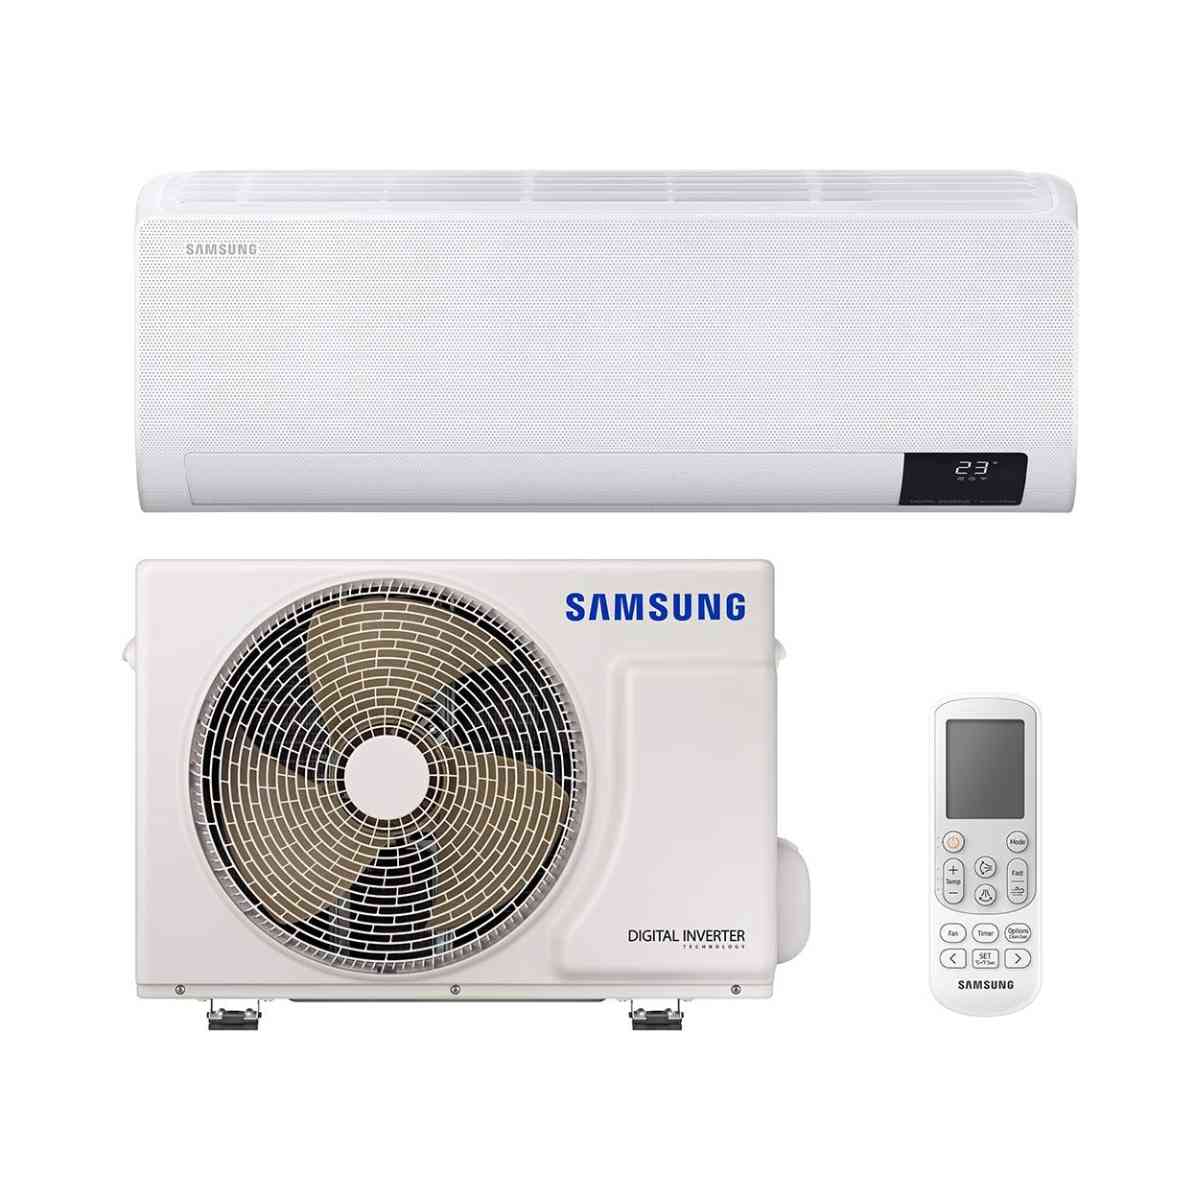 Ar condicionado fixo 1x1 Samsung Wind Free Comfort F-AR09NXT 2,5kW 9000 BTU com referência F-AR09NXT da marca SAMSUNG